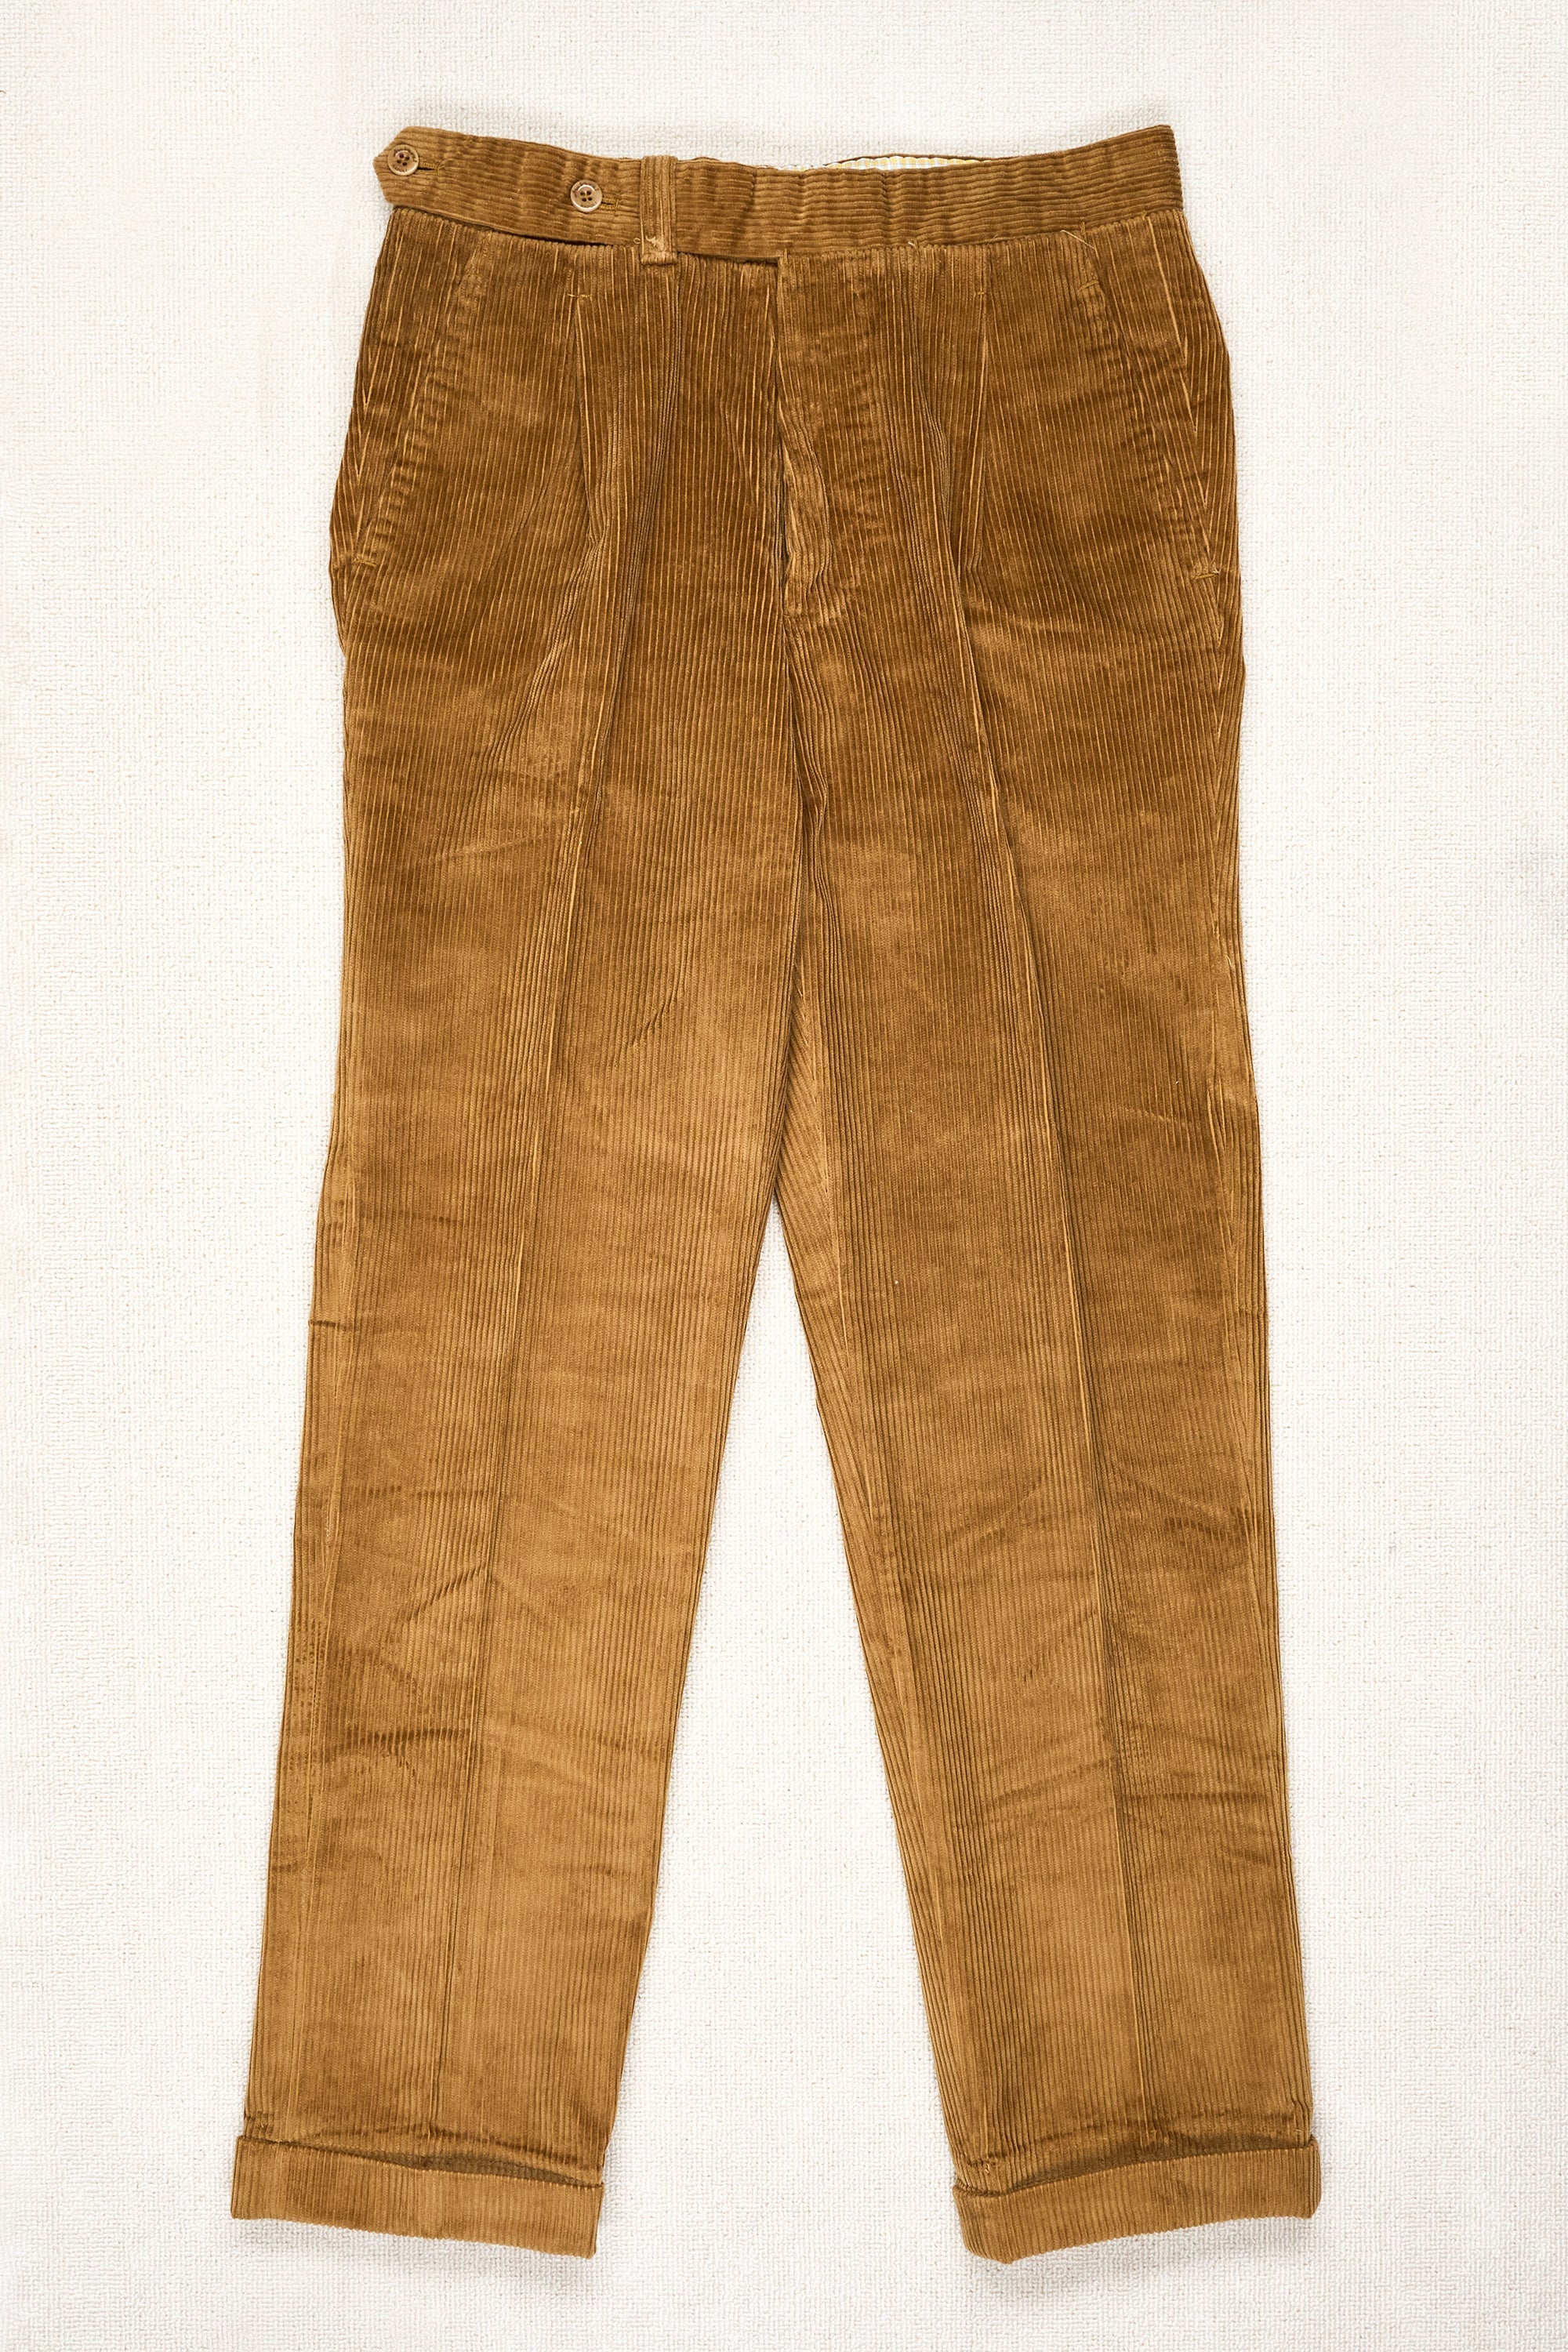 Ambrosi Napoli Camel Cotton Corduroy Single-Pleat Trousers Bespoke